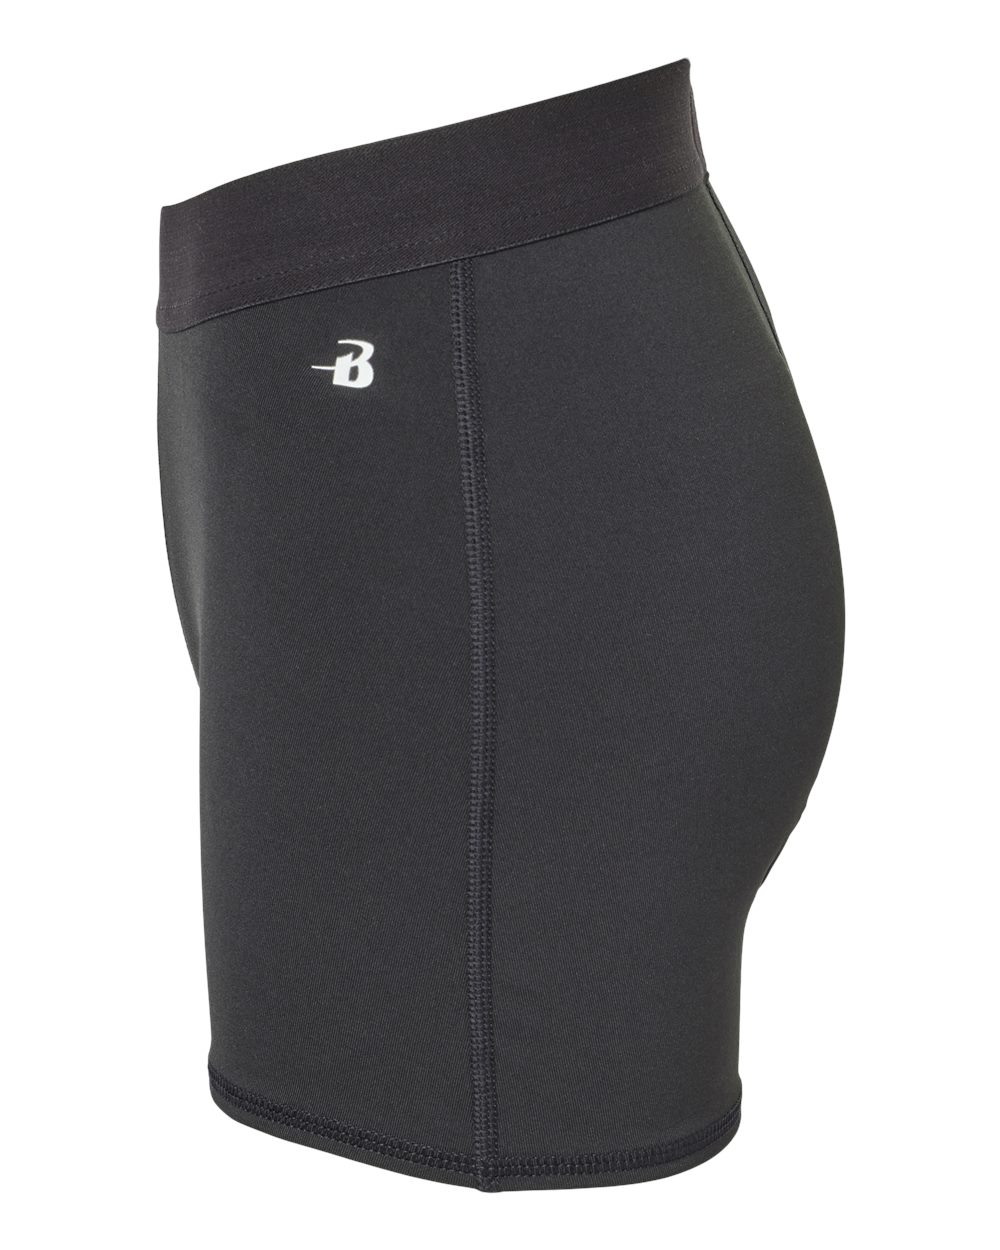 Women's Porta Potty 3 Compression Shorts